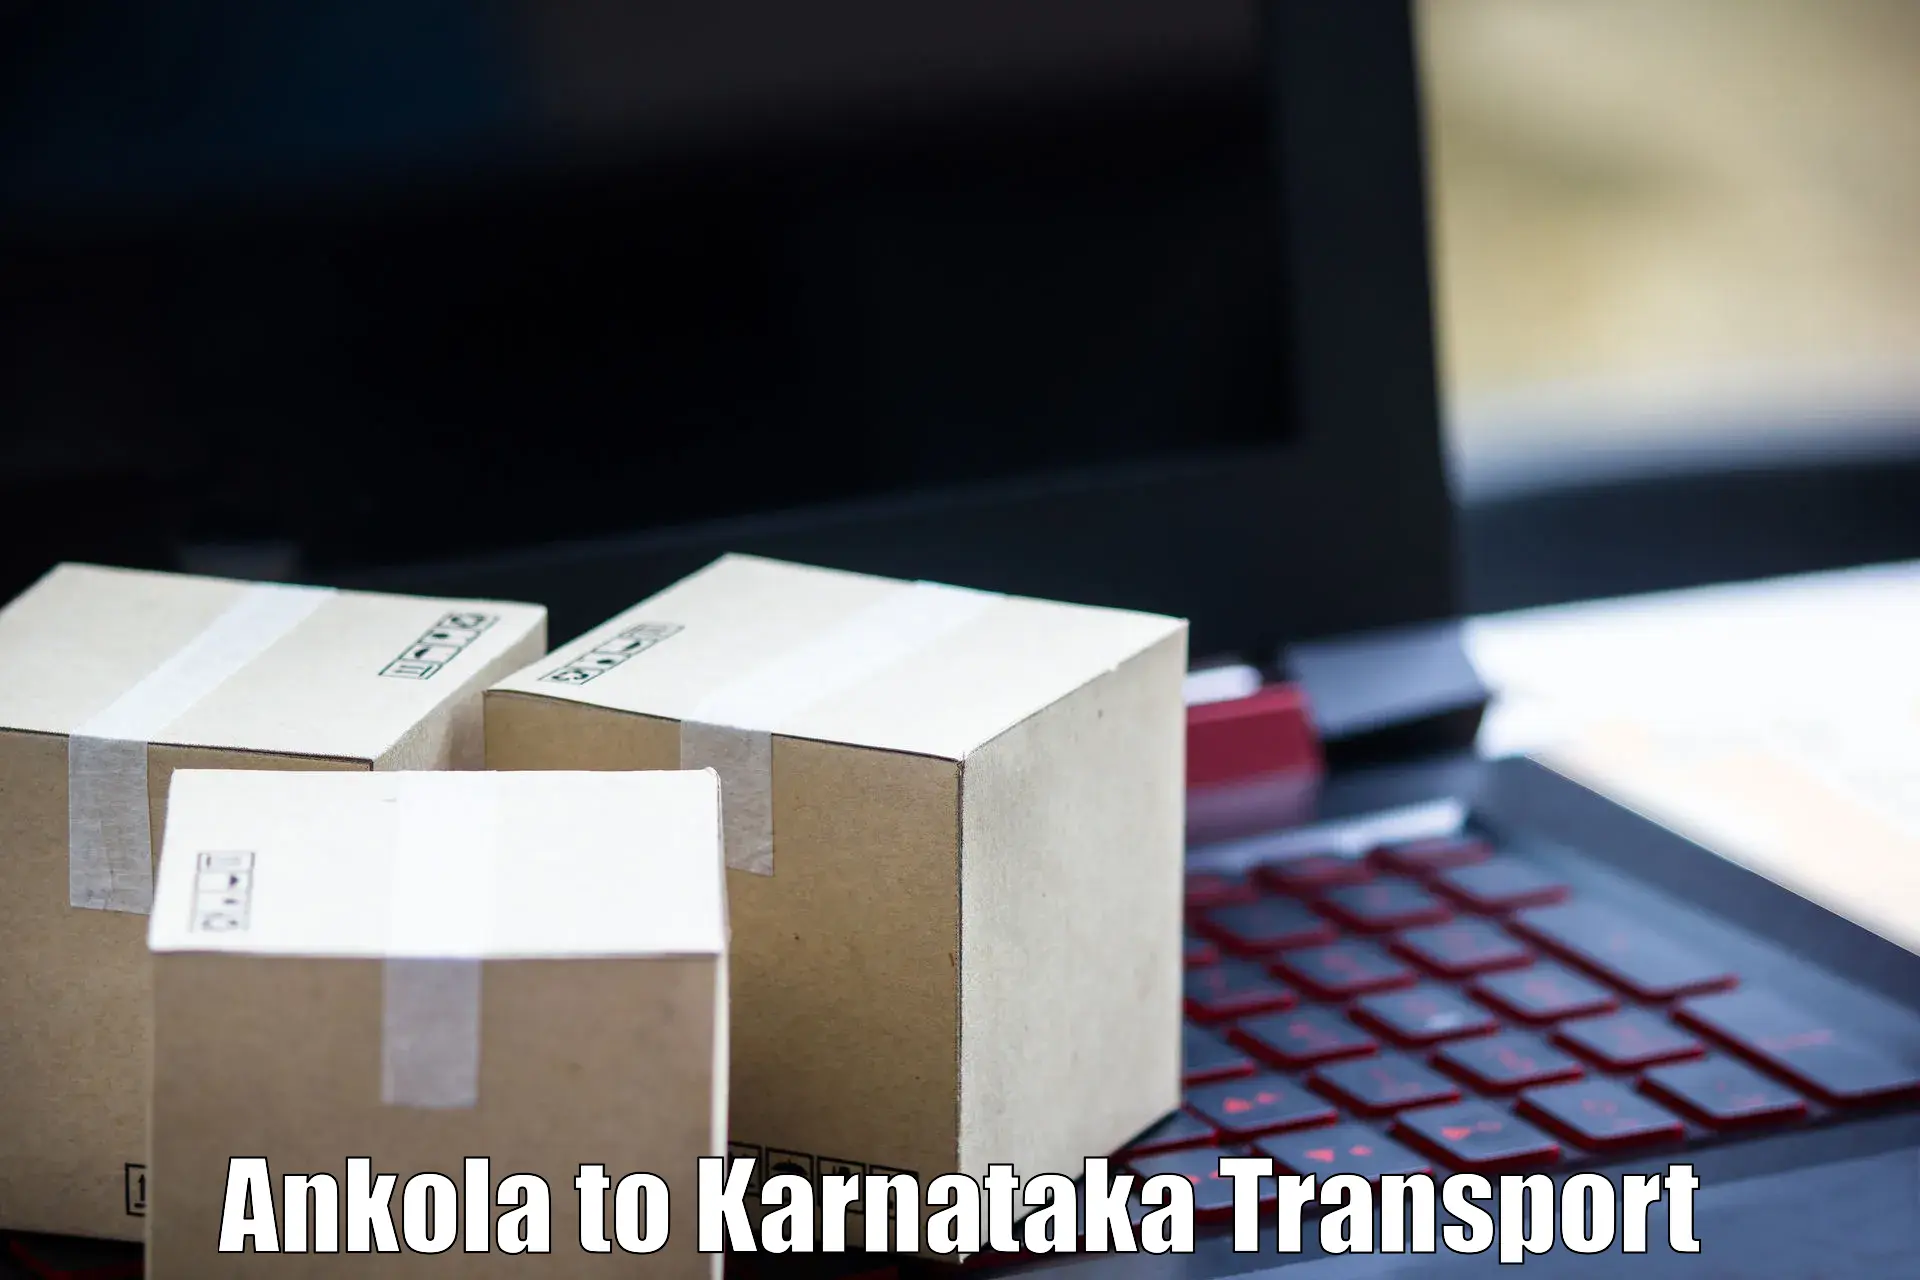 Truck transport companies in India Ankola to Mangalore